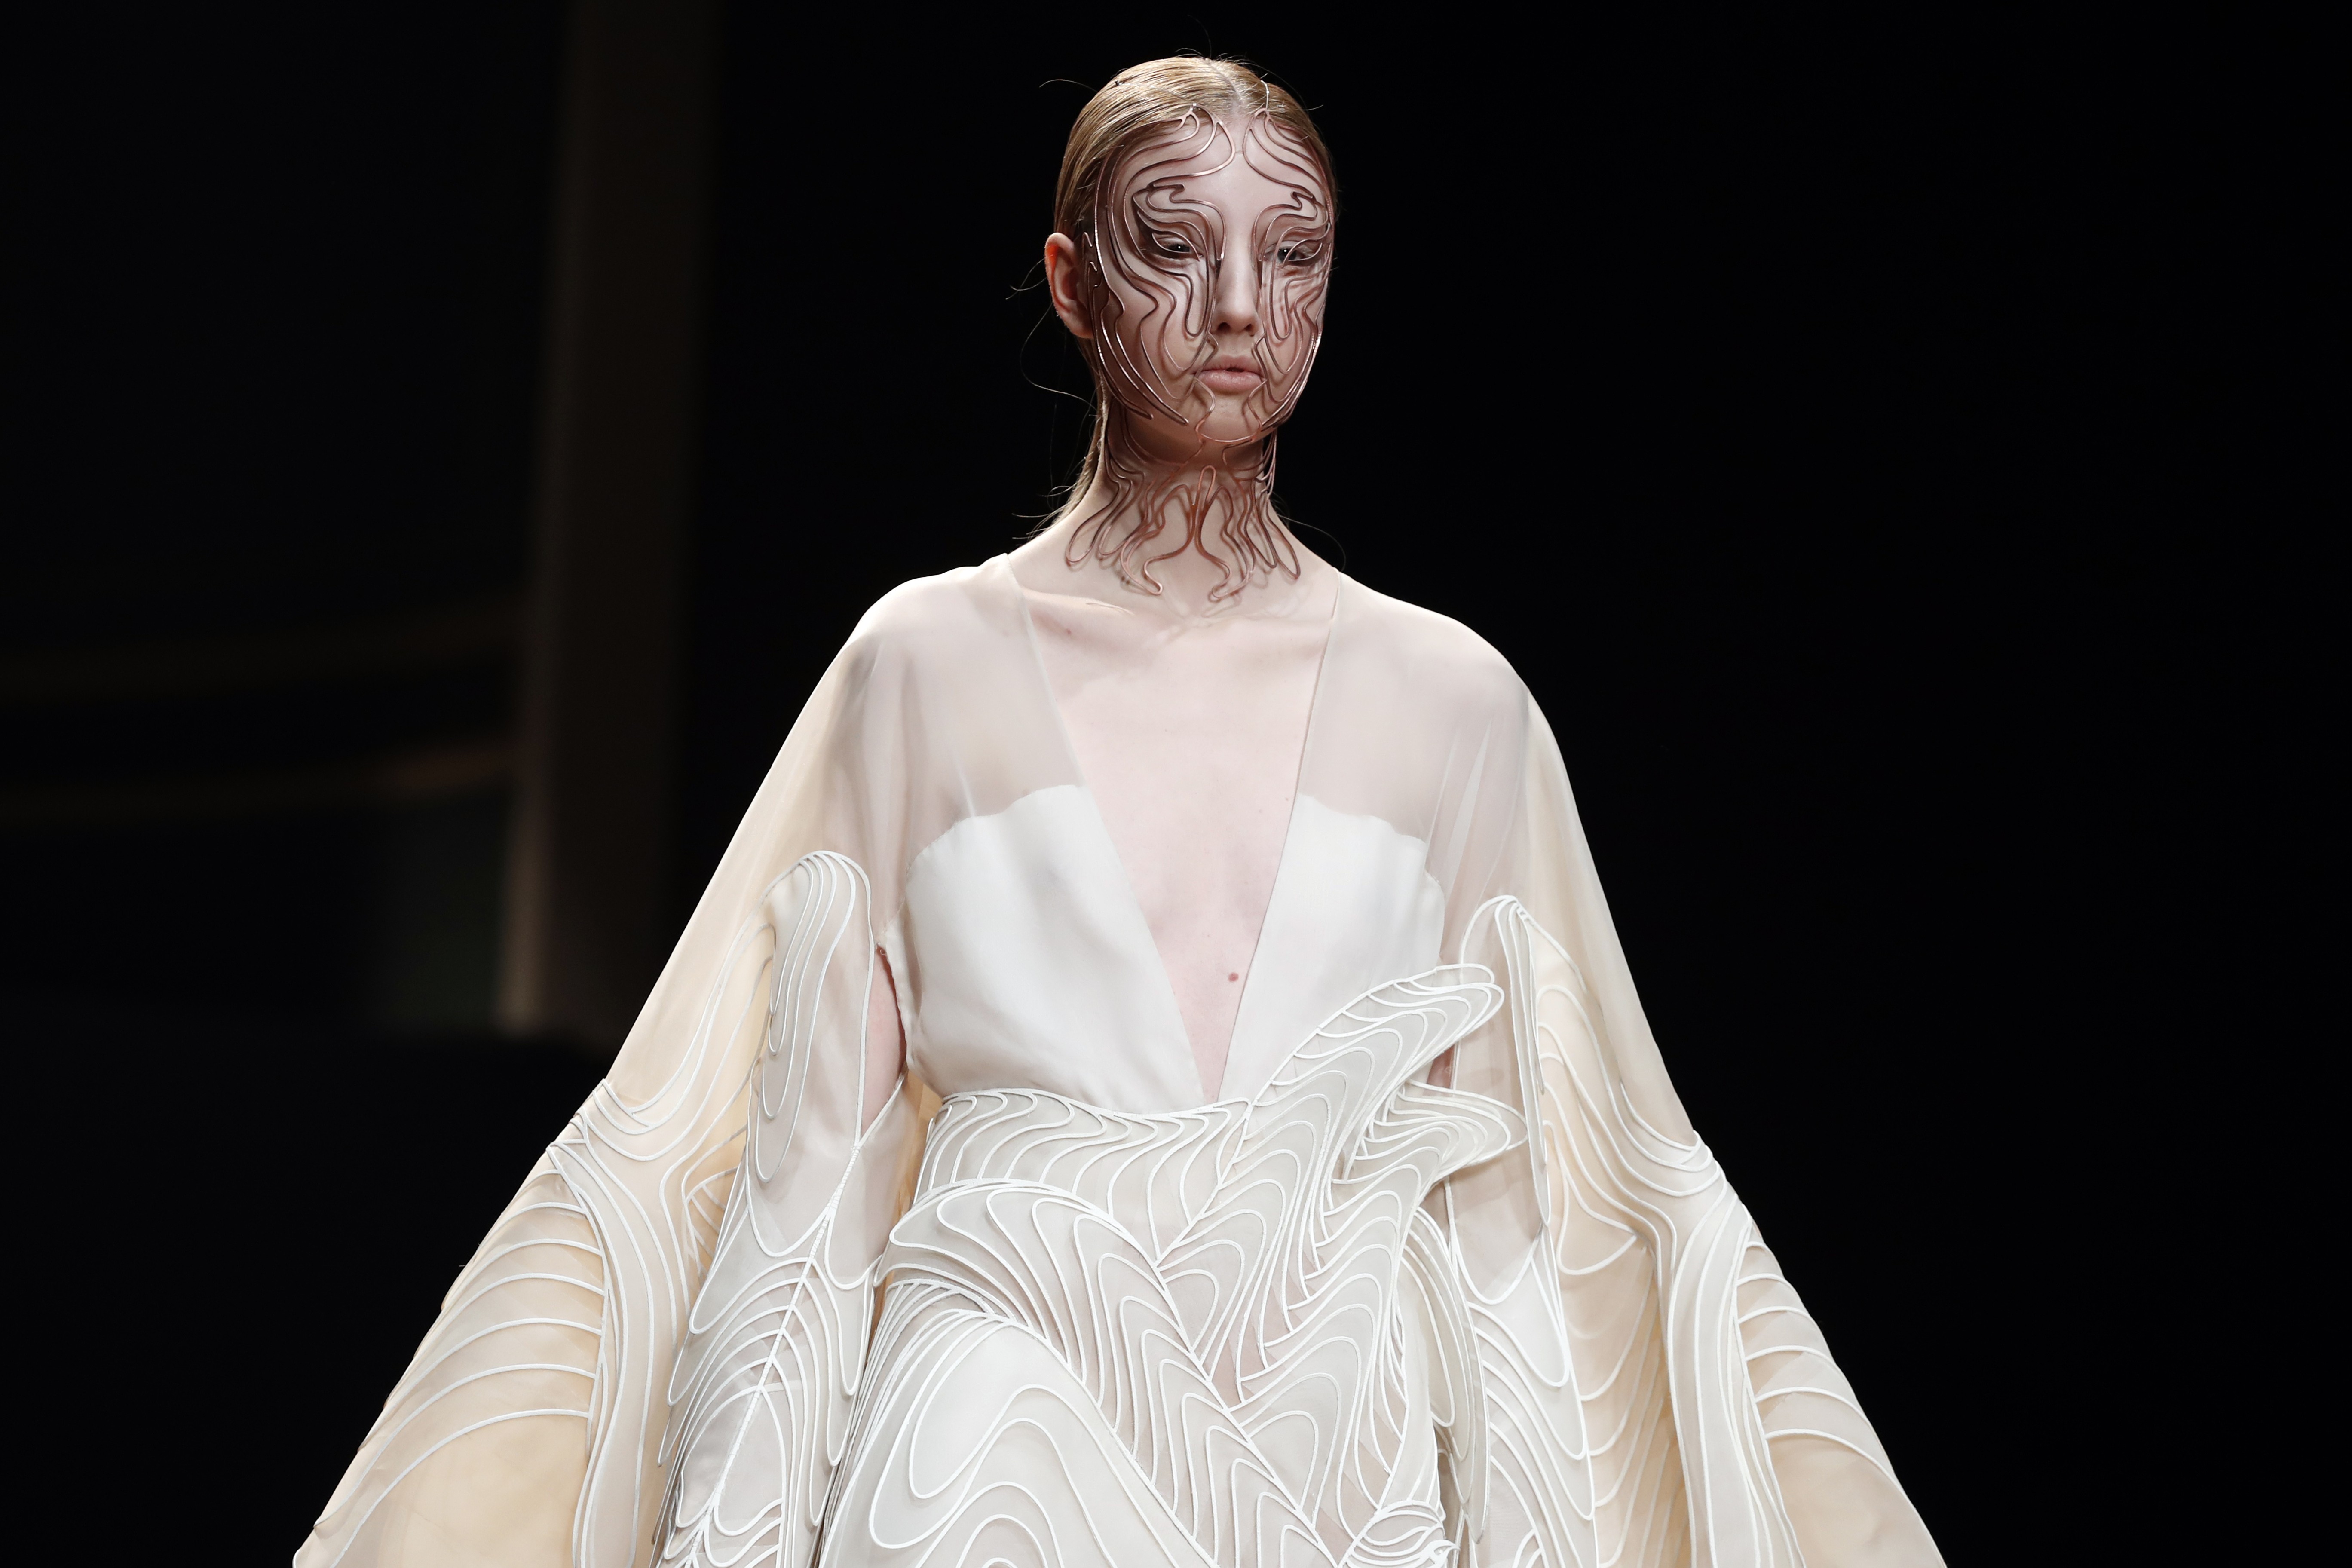 Paris Fashion Week: Iris van Herpen’s ‘flowing paint’ gowns and Ralph ...